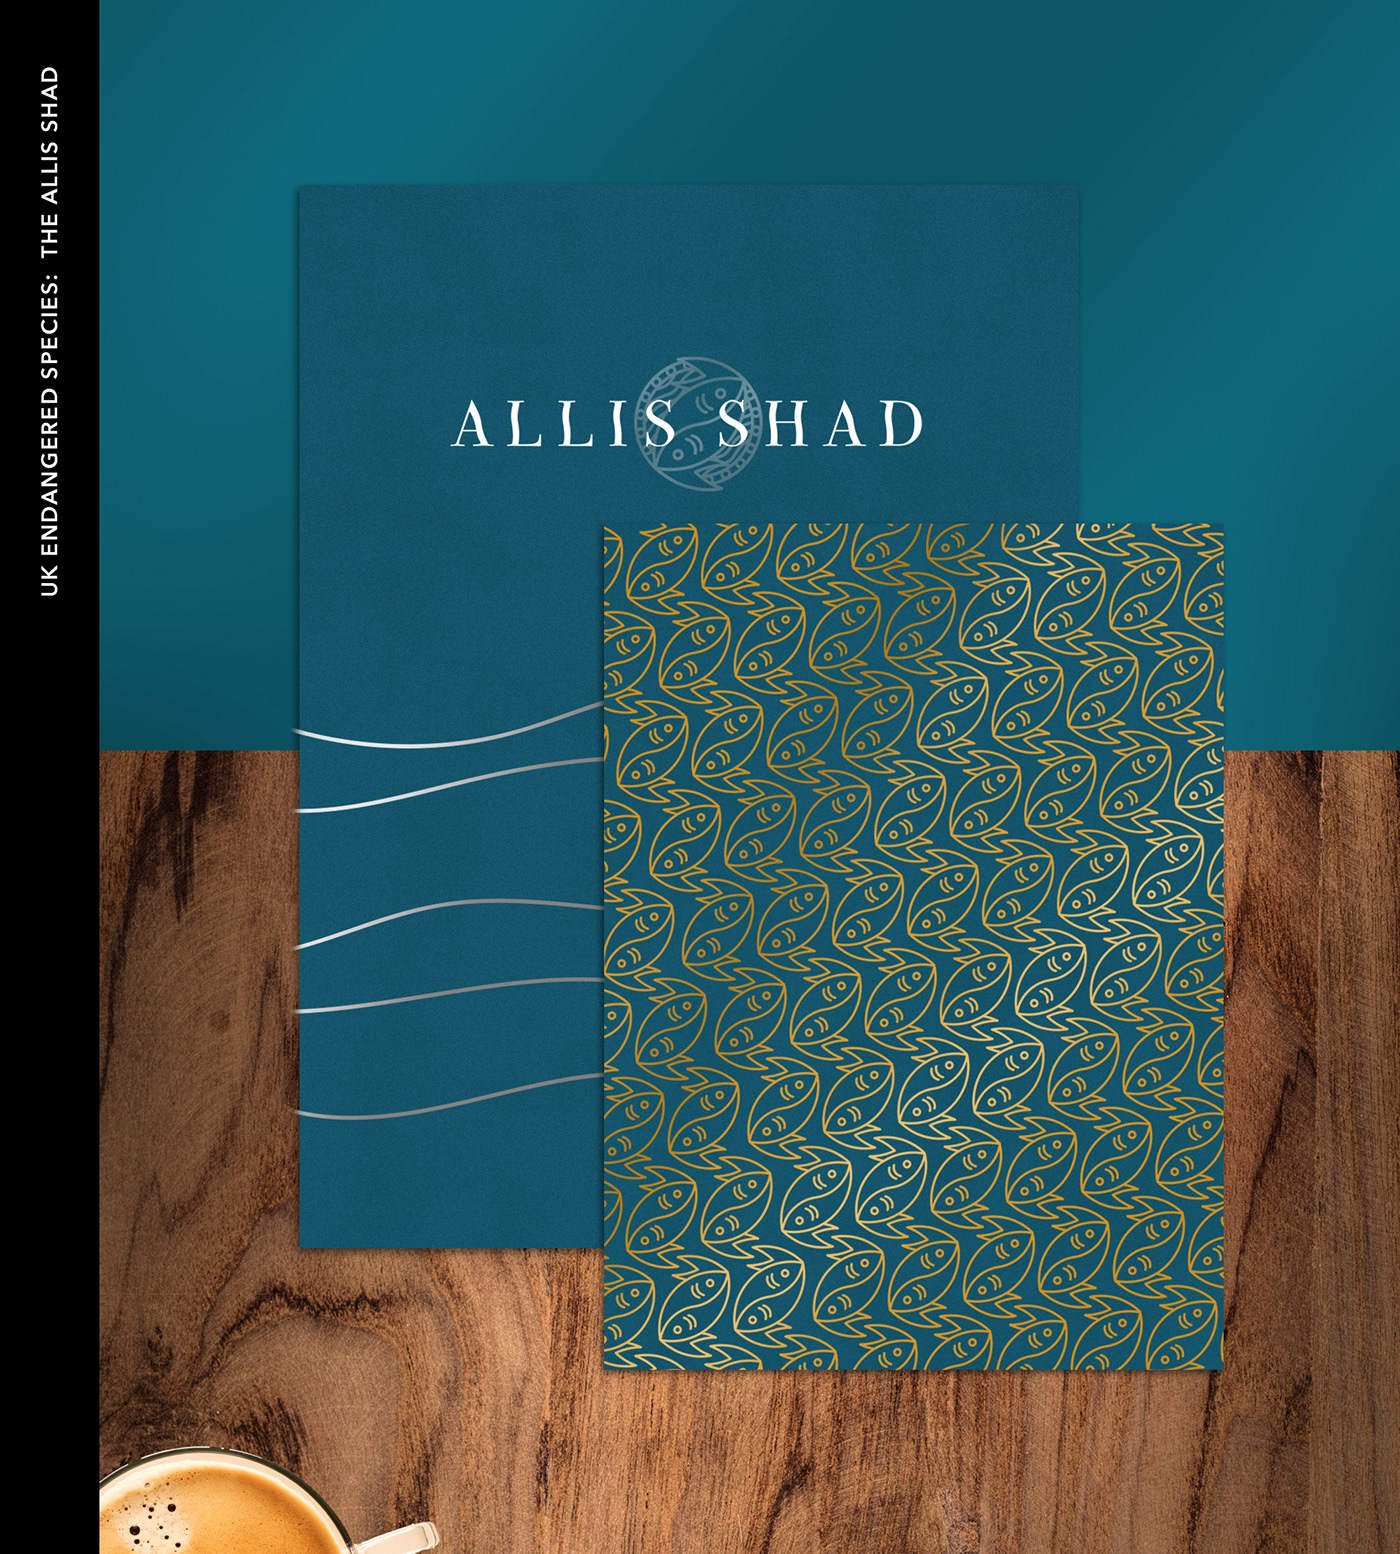 allis shad brand menu design